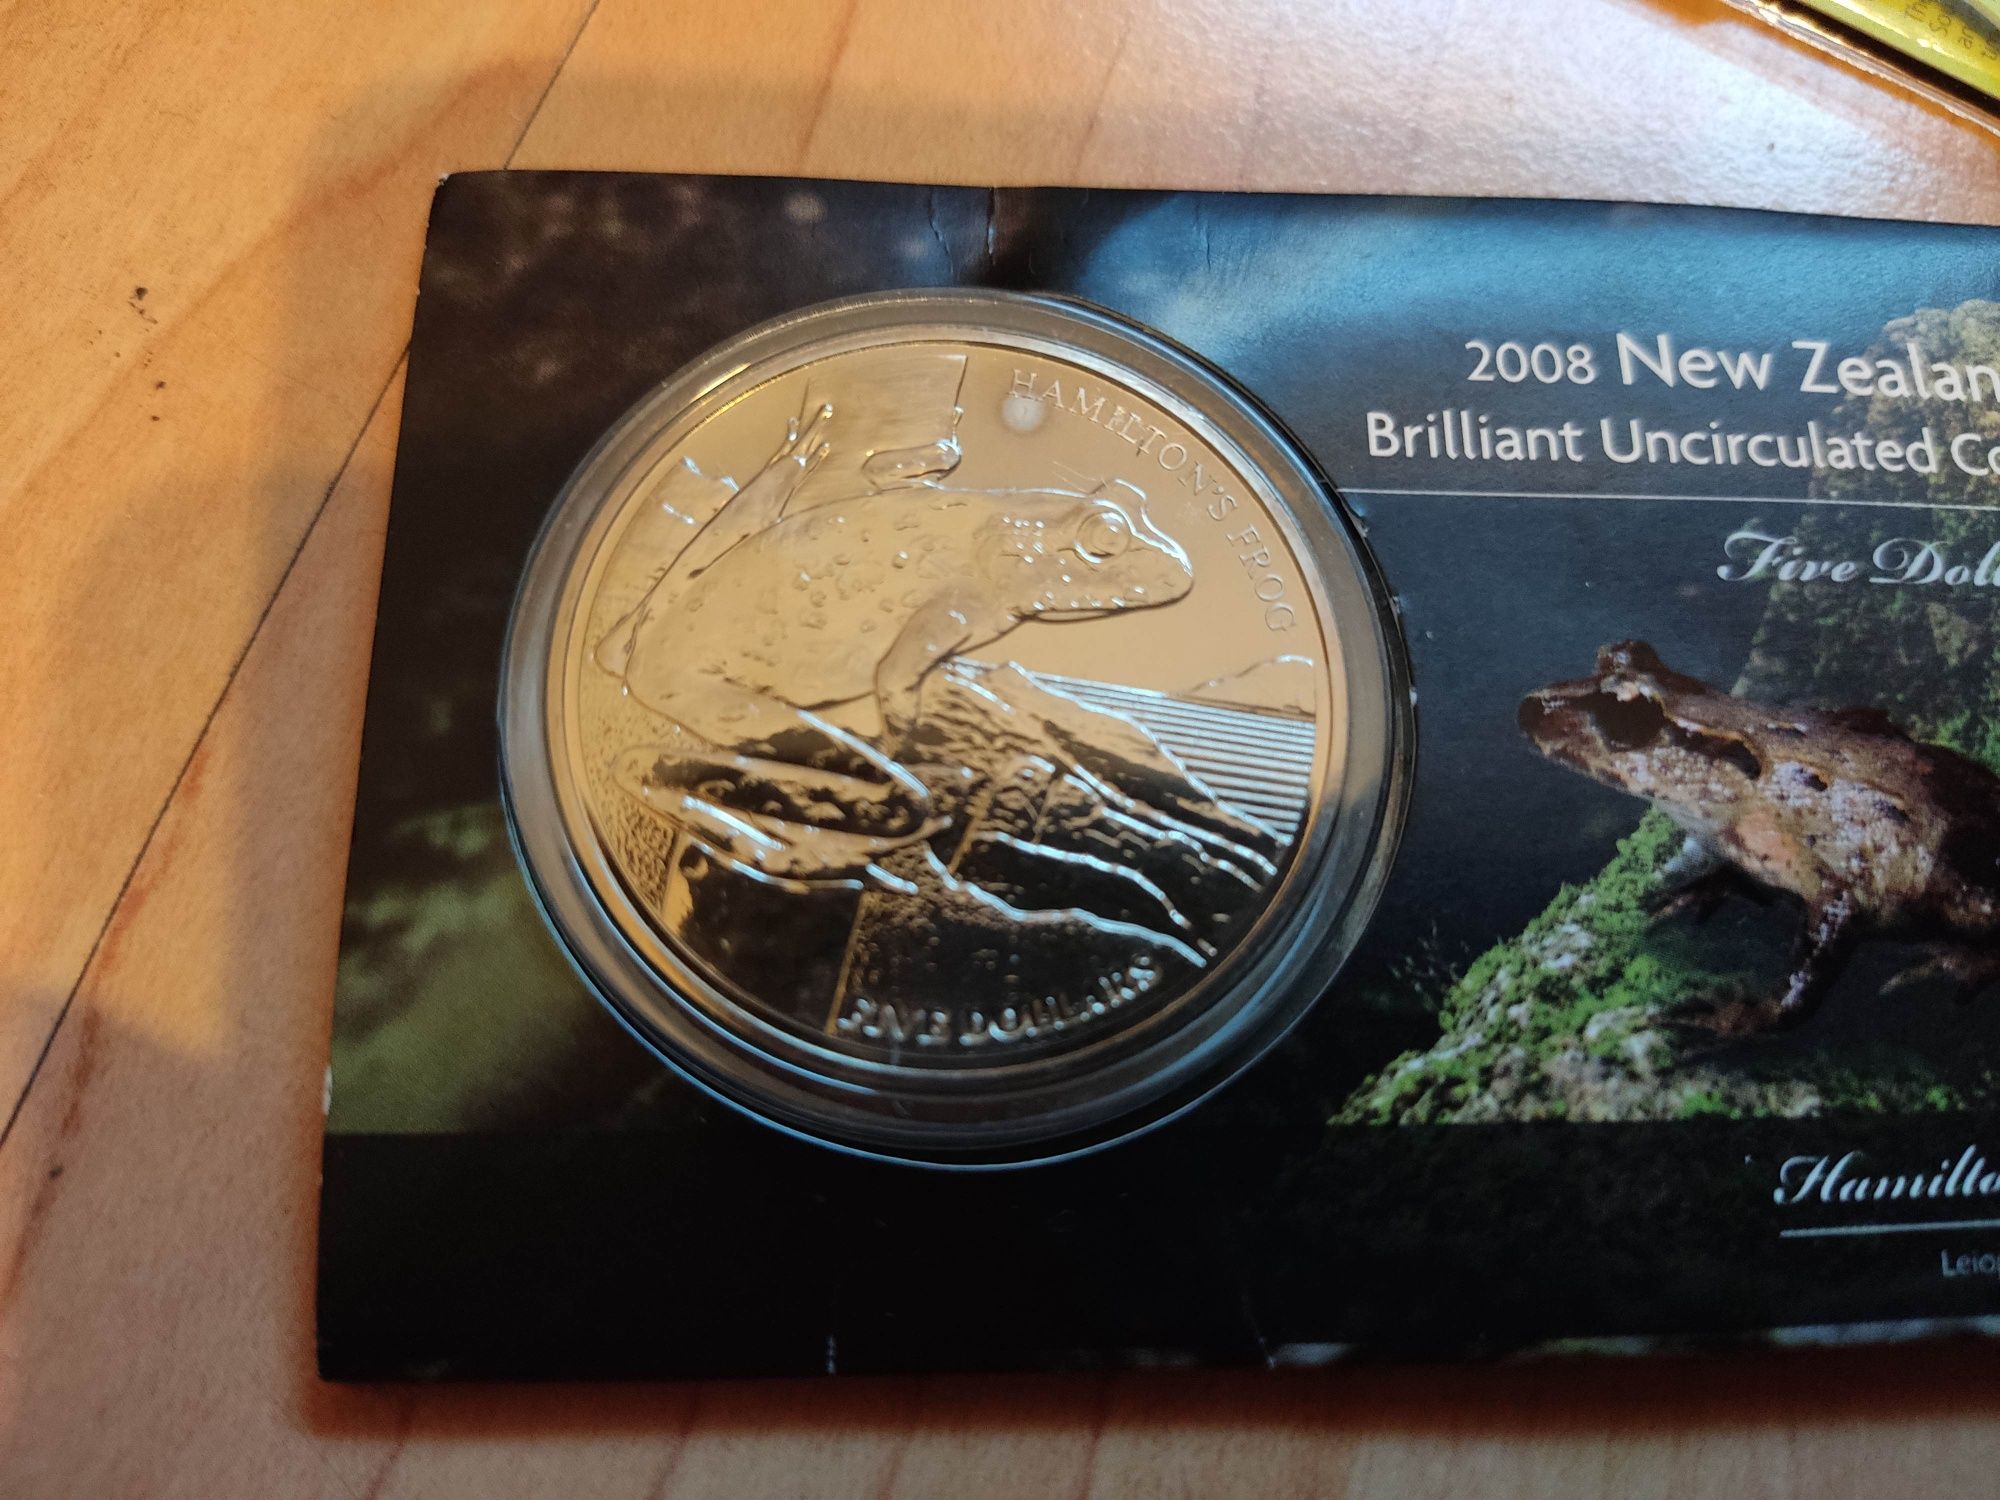 Monety Kakapo oraz Hamilton's frog 5$ Nowa Zelandia miedzionikiel